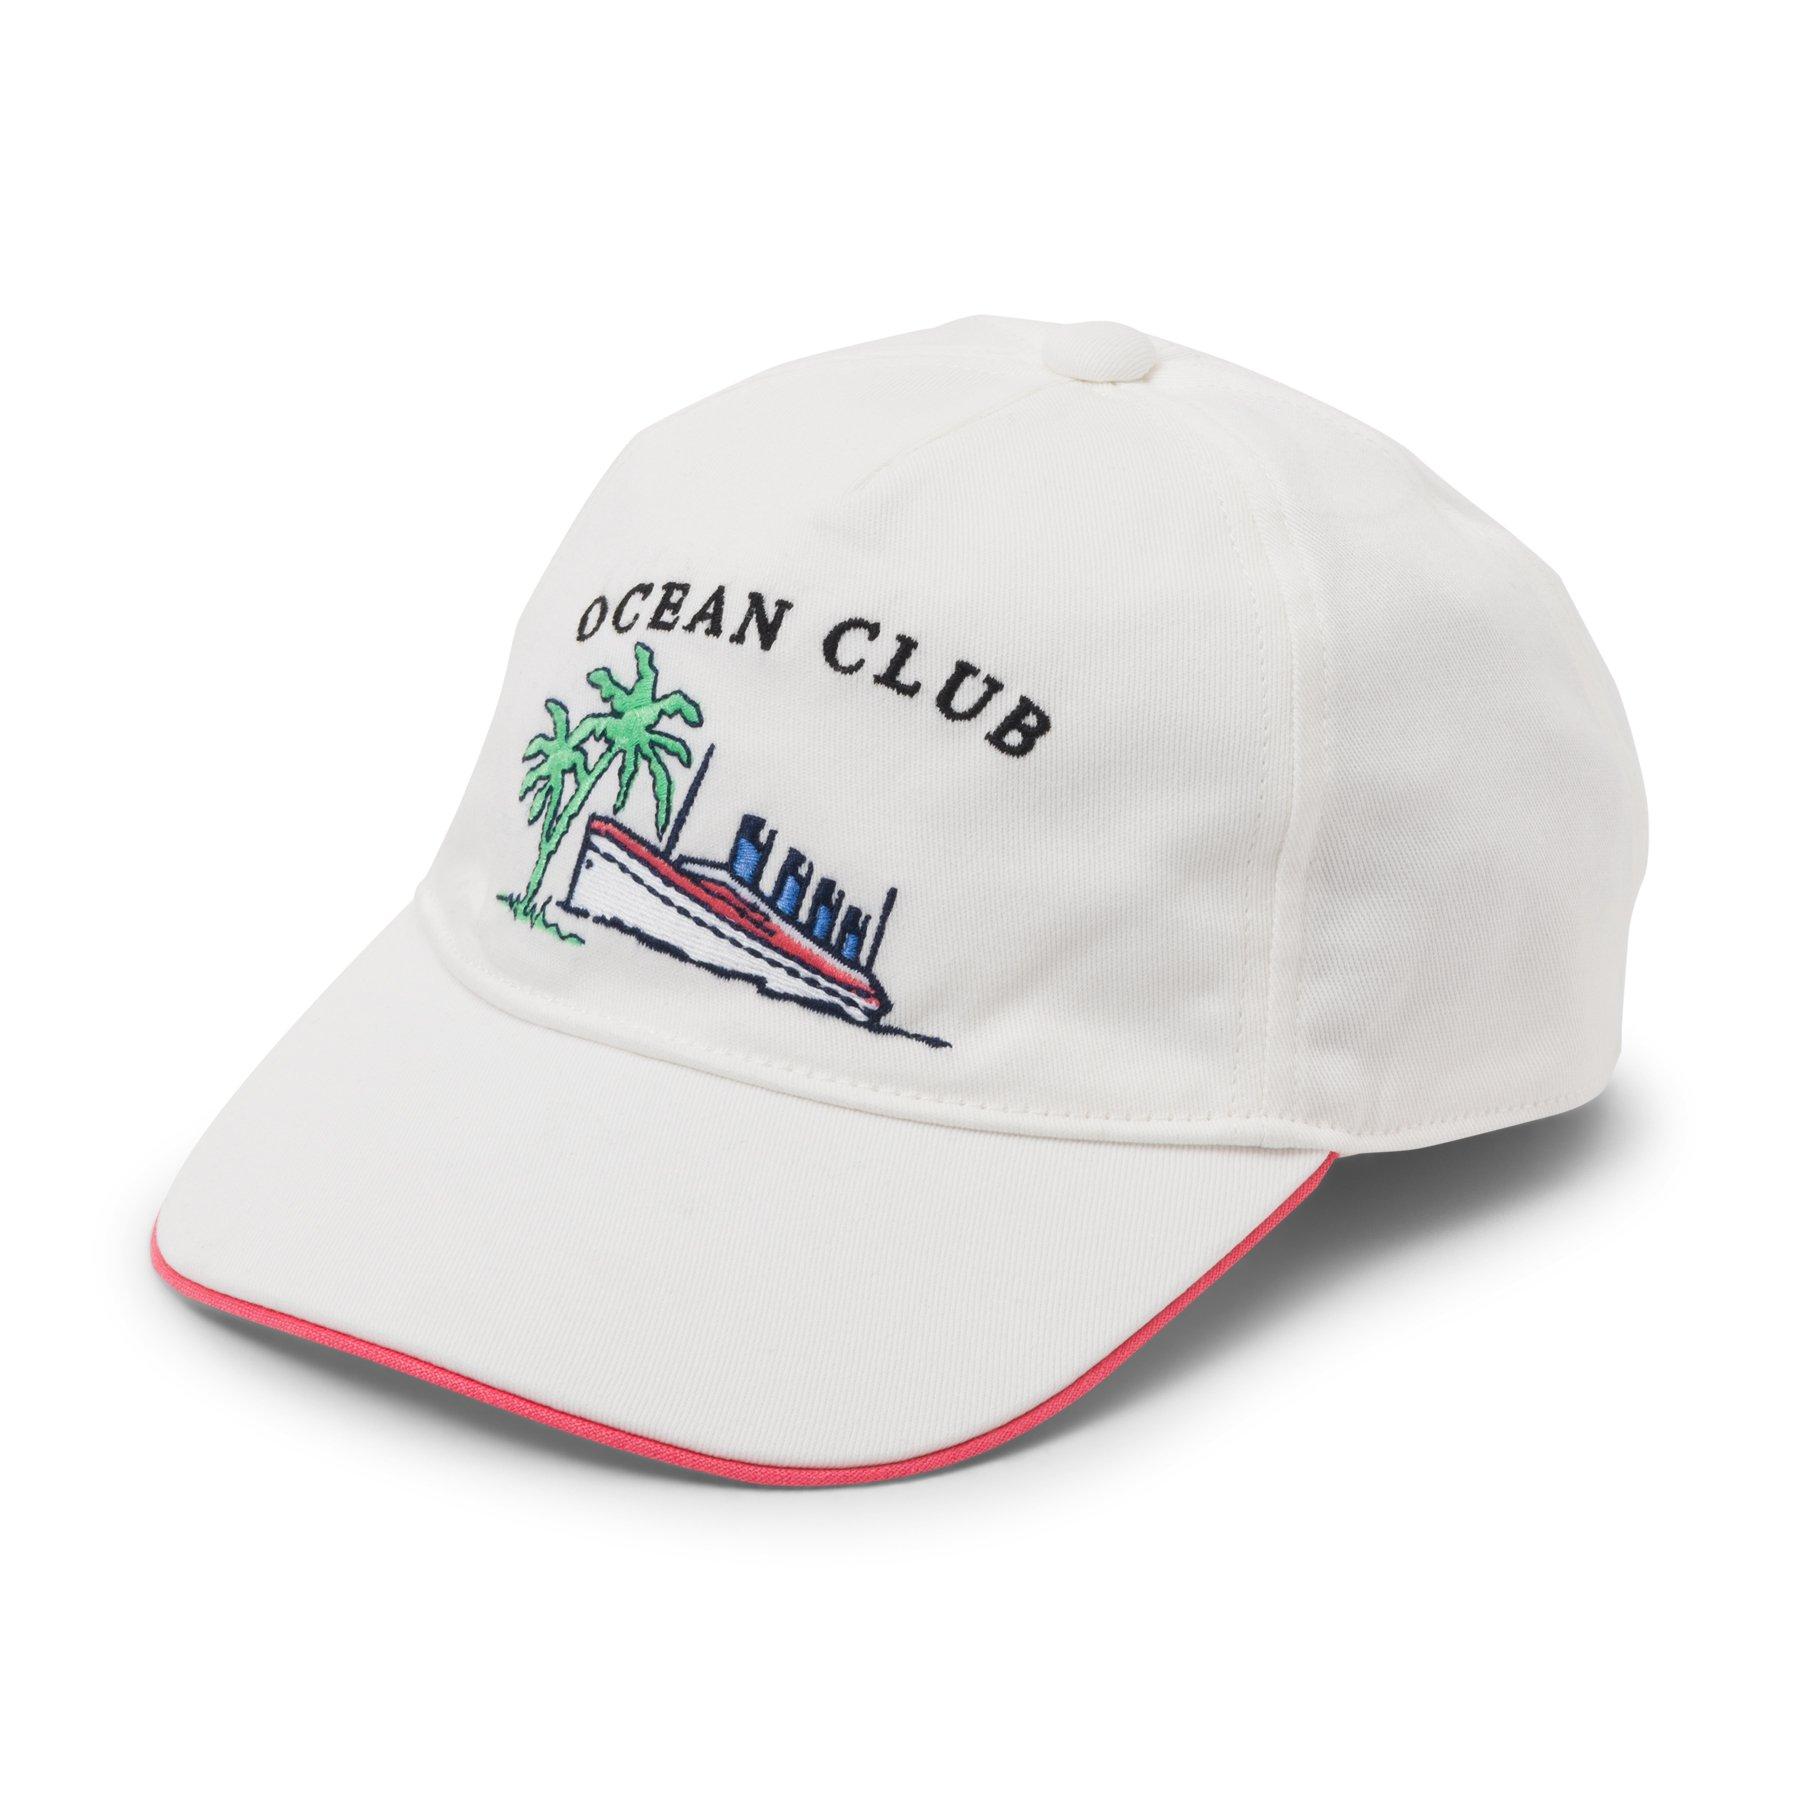 Ocean Club Cap